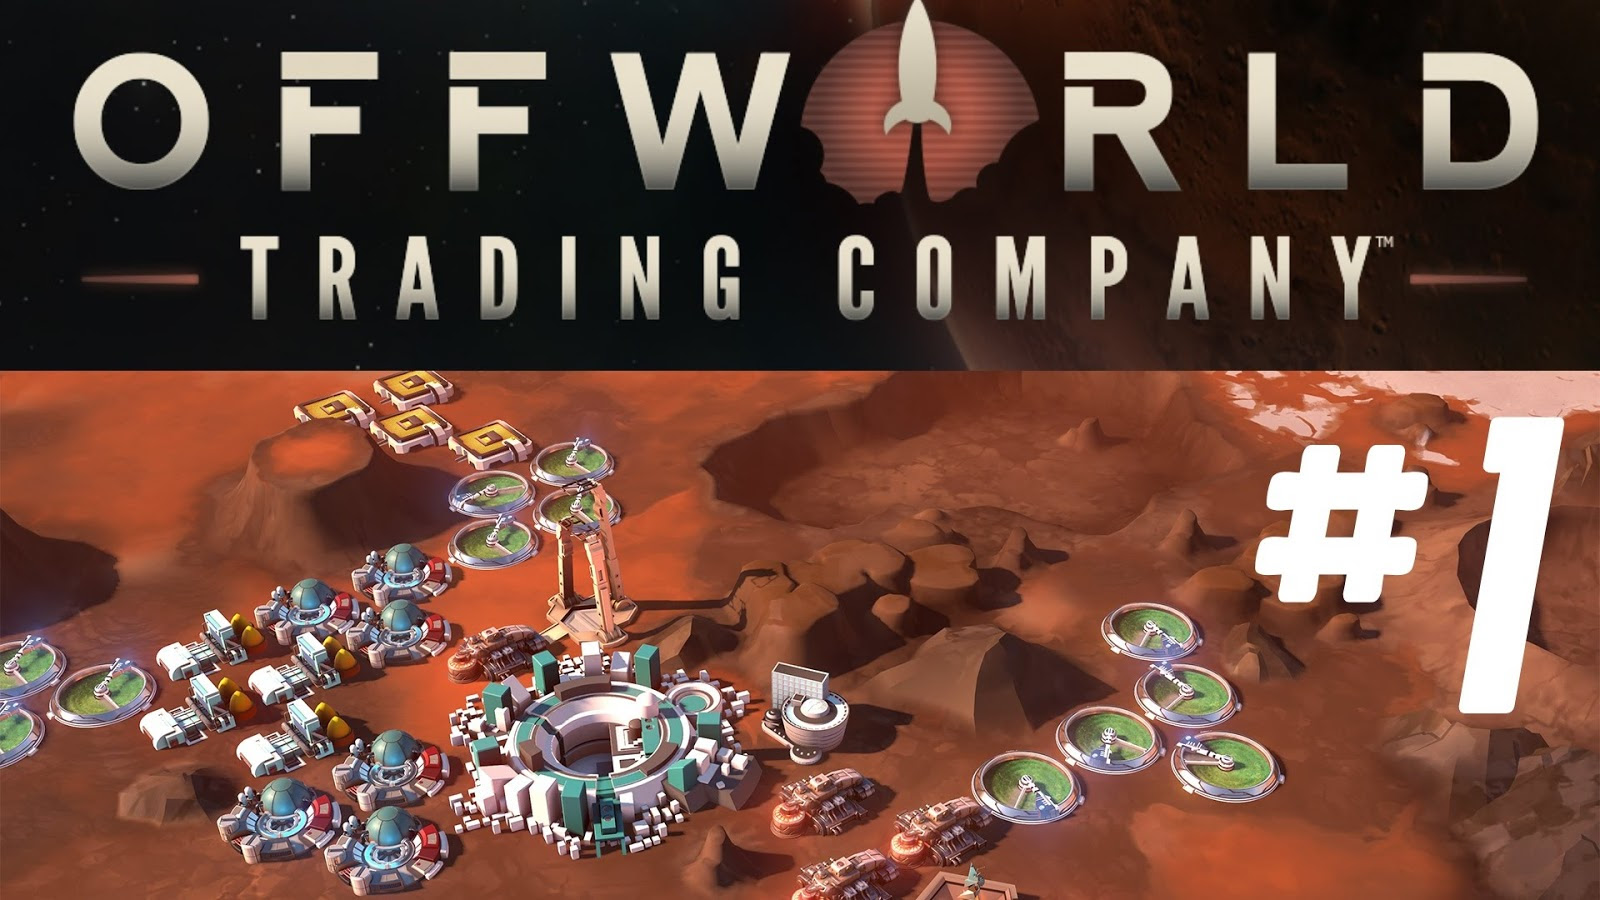 Offworld Trading Company CD Key 2016 Hack Crack Keygen Game for